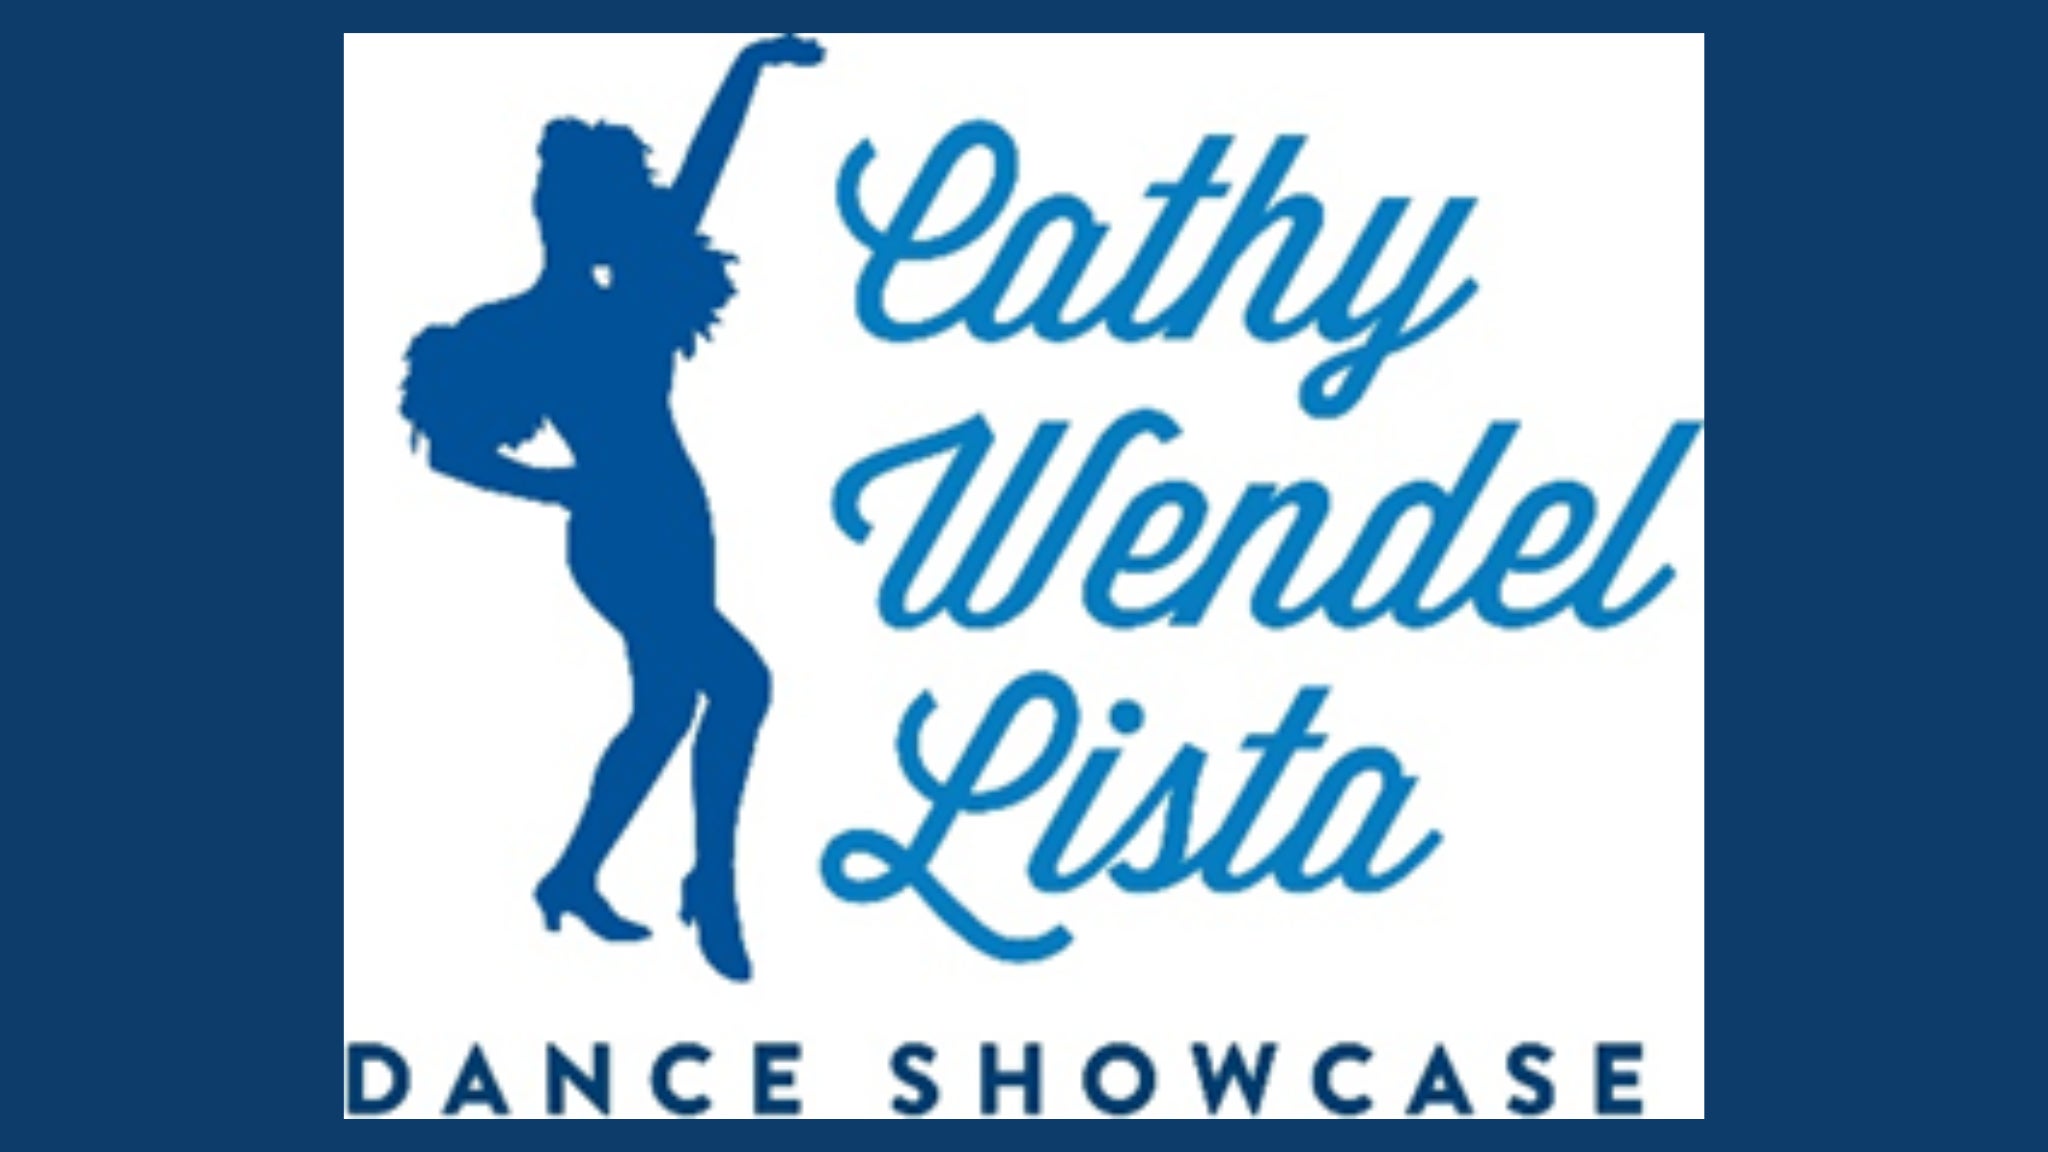 Cathy Wendel Lista Dance Showcase